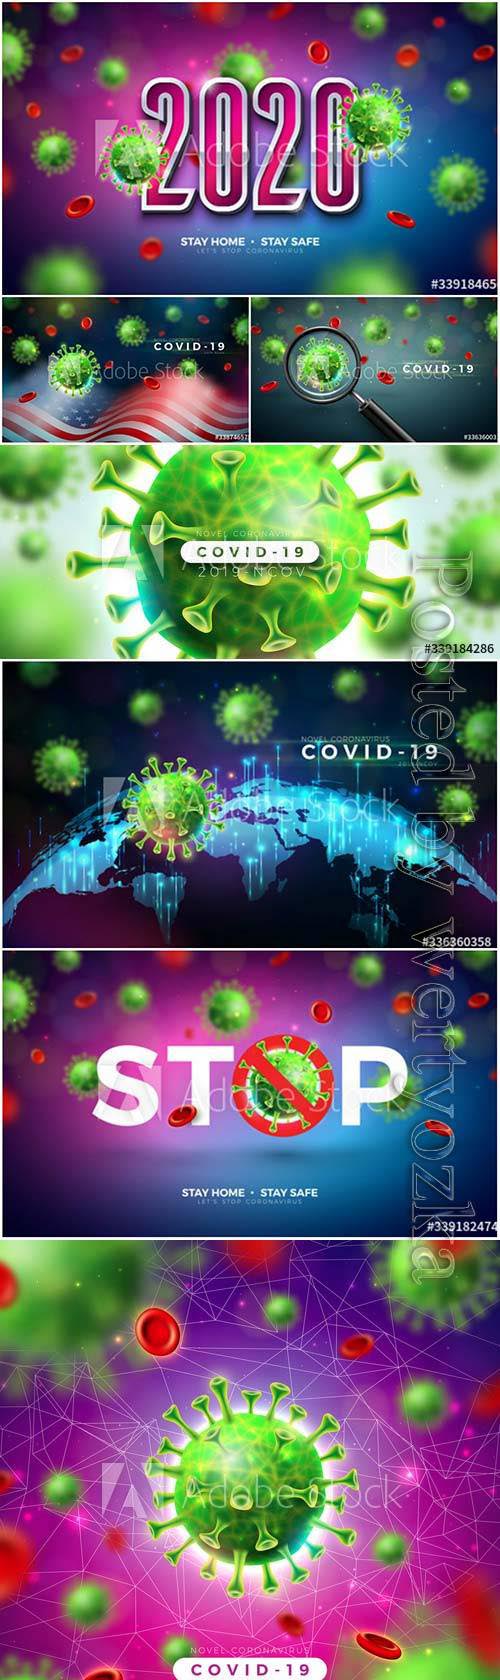 Stay home, stop coronavirus vector design